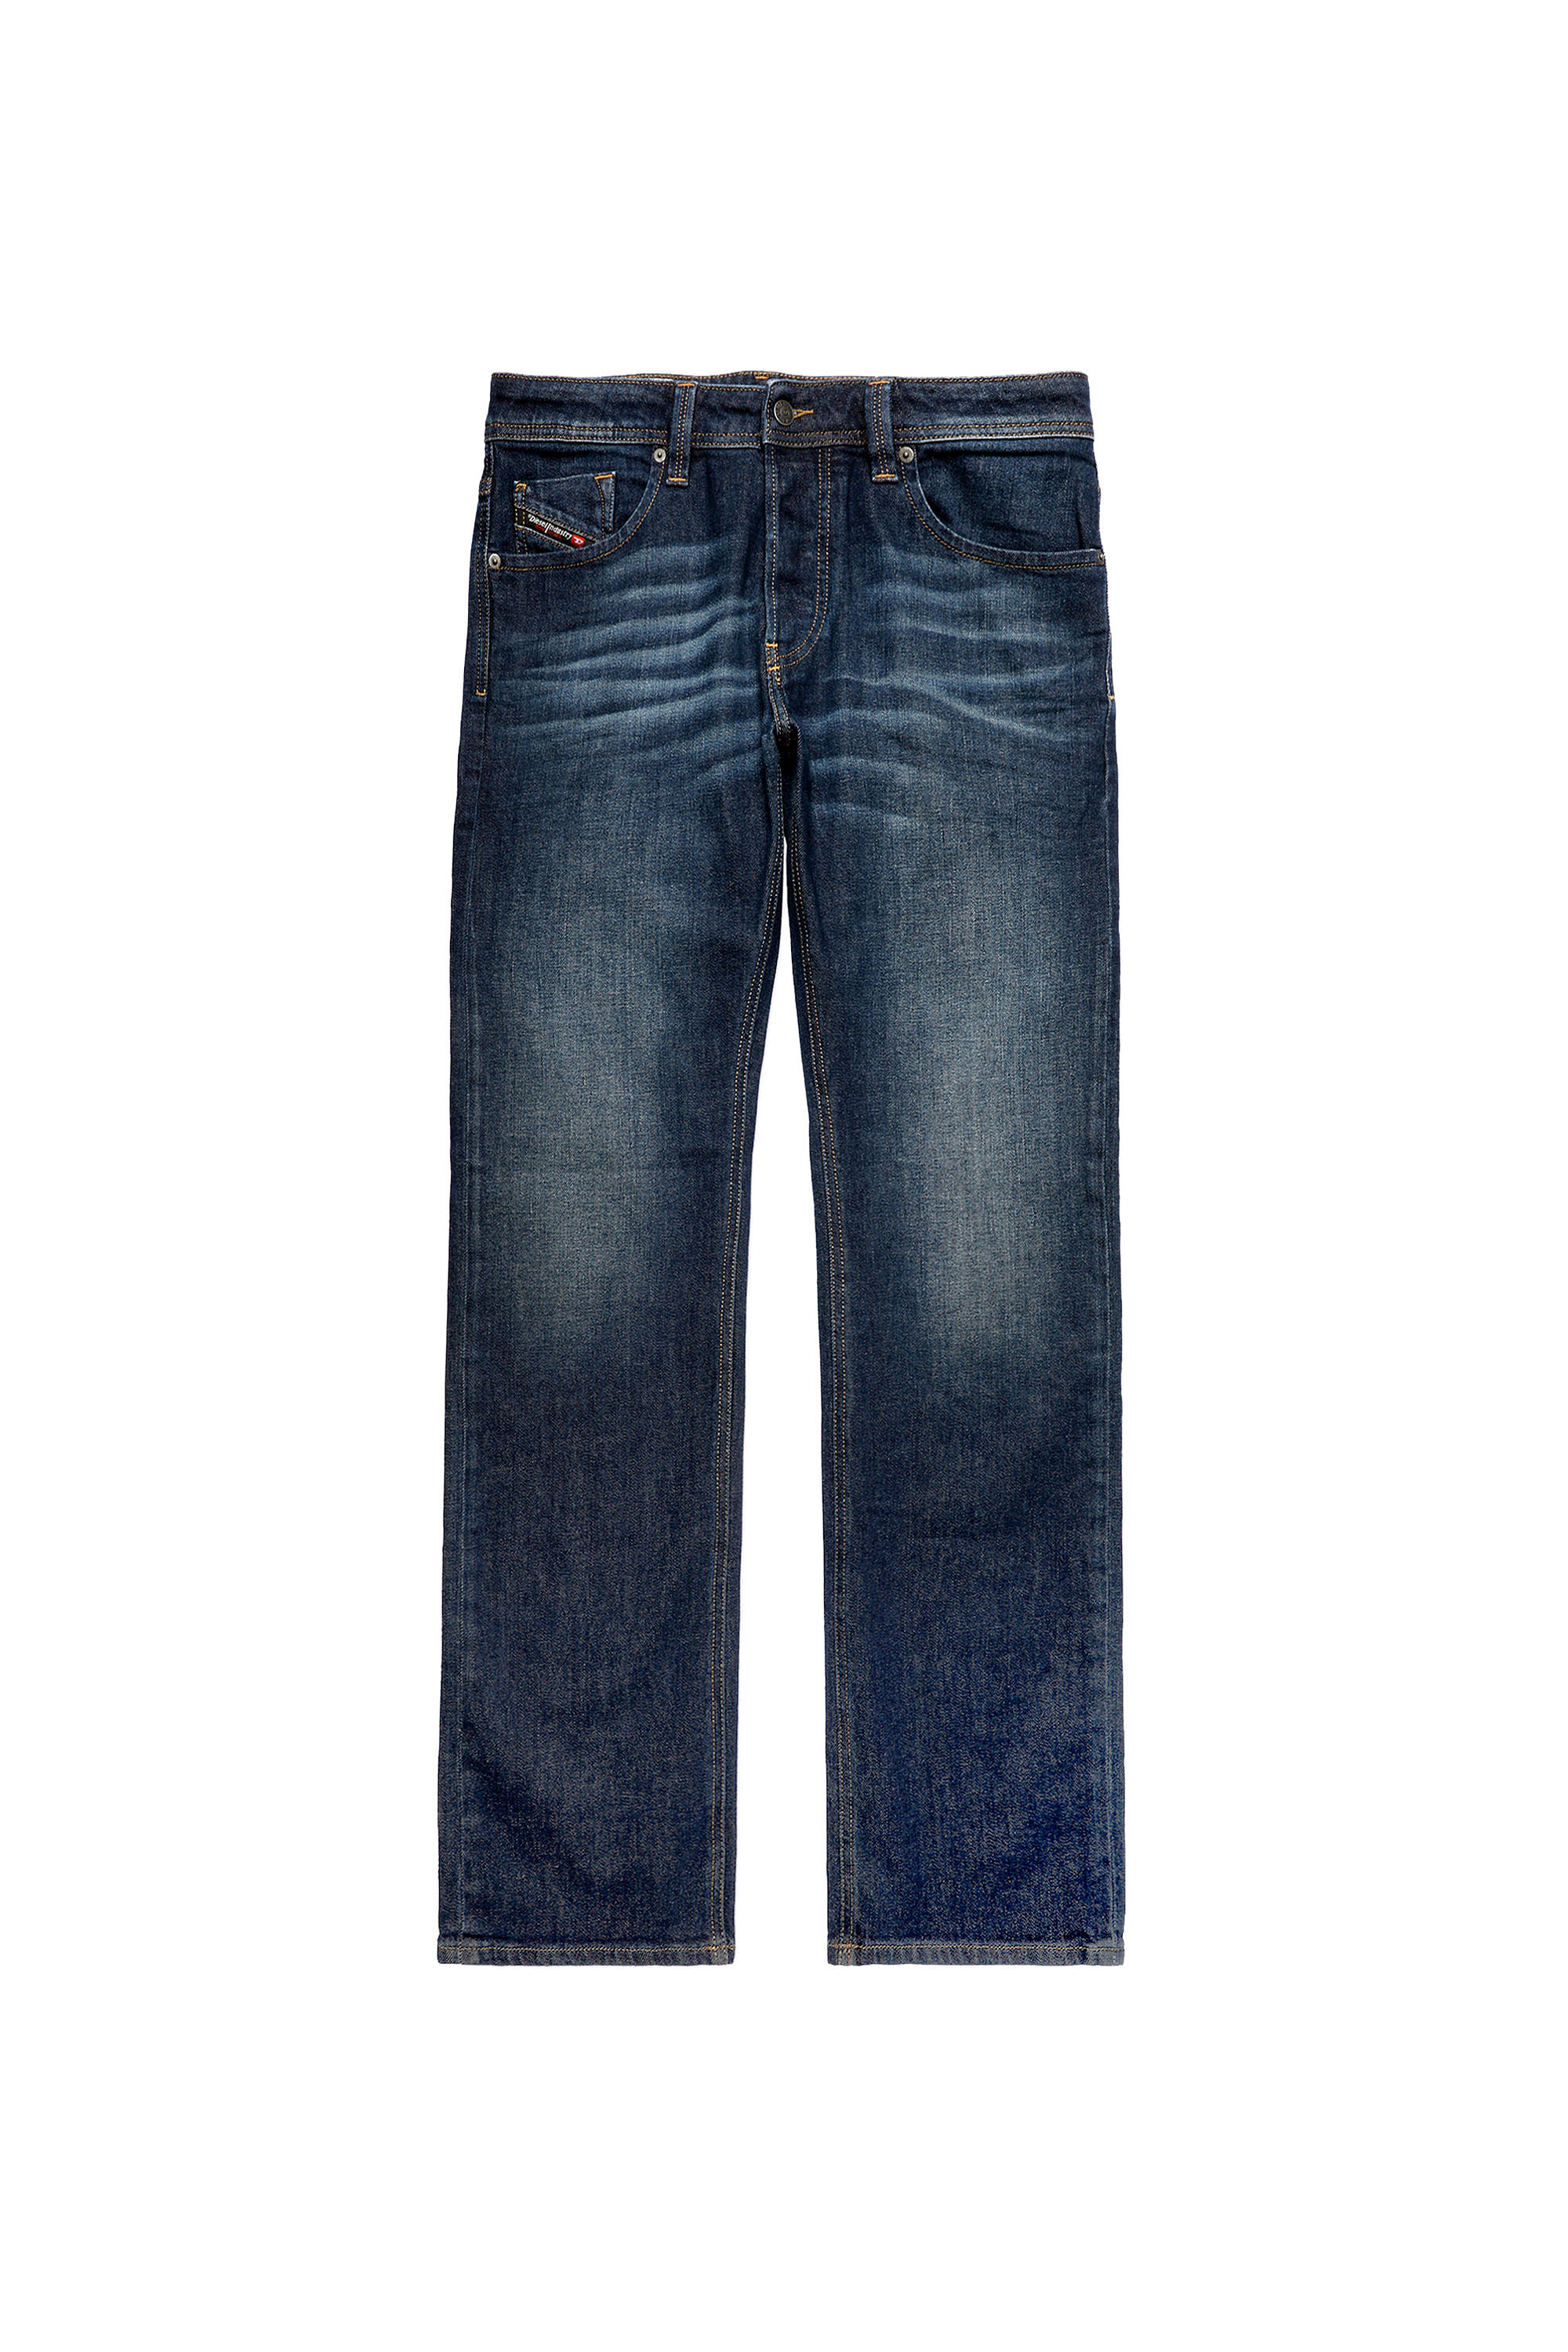 Diesel - Larkee 009HN Straight Jeans,  - Image 7